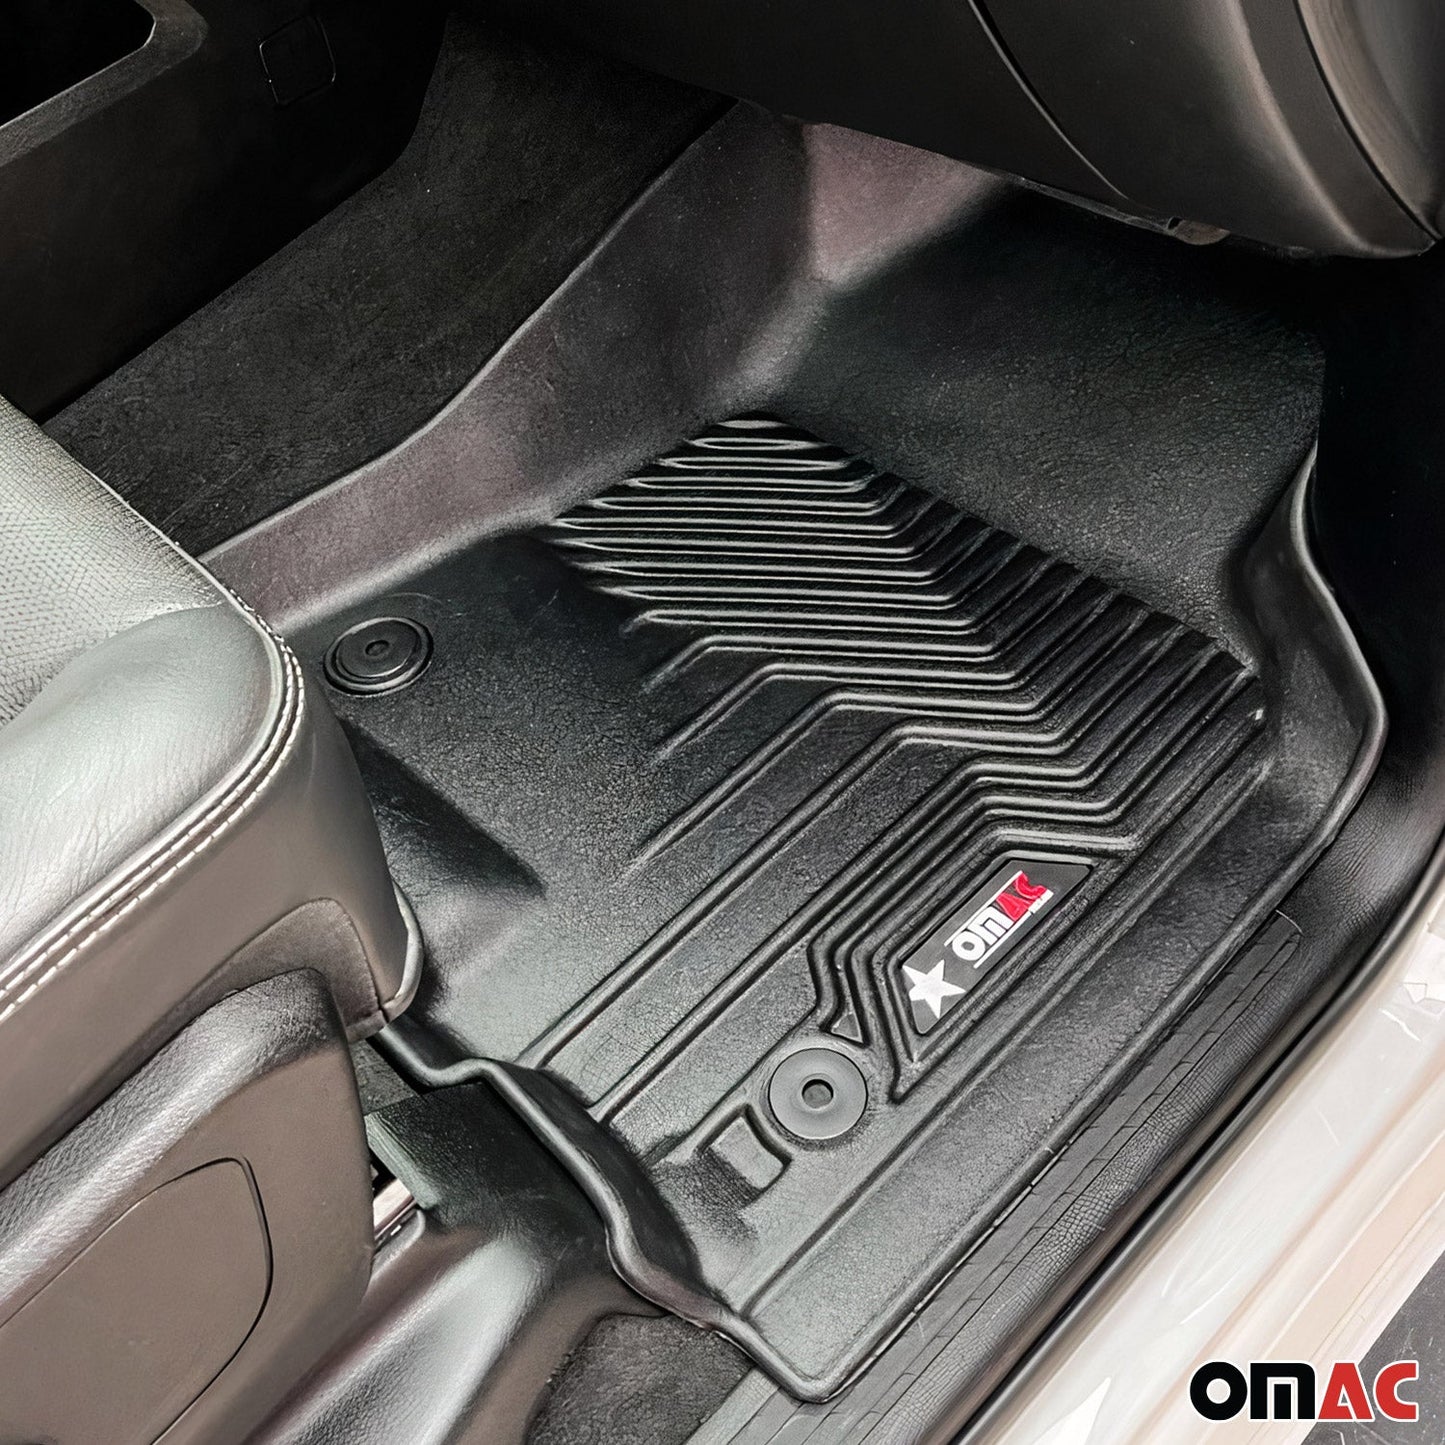 OMAC OMAC Premium Floor Mats for GMC Sierra 1500 Silverado Double Cab 2014-18 Front VRT1685464-1